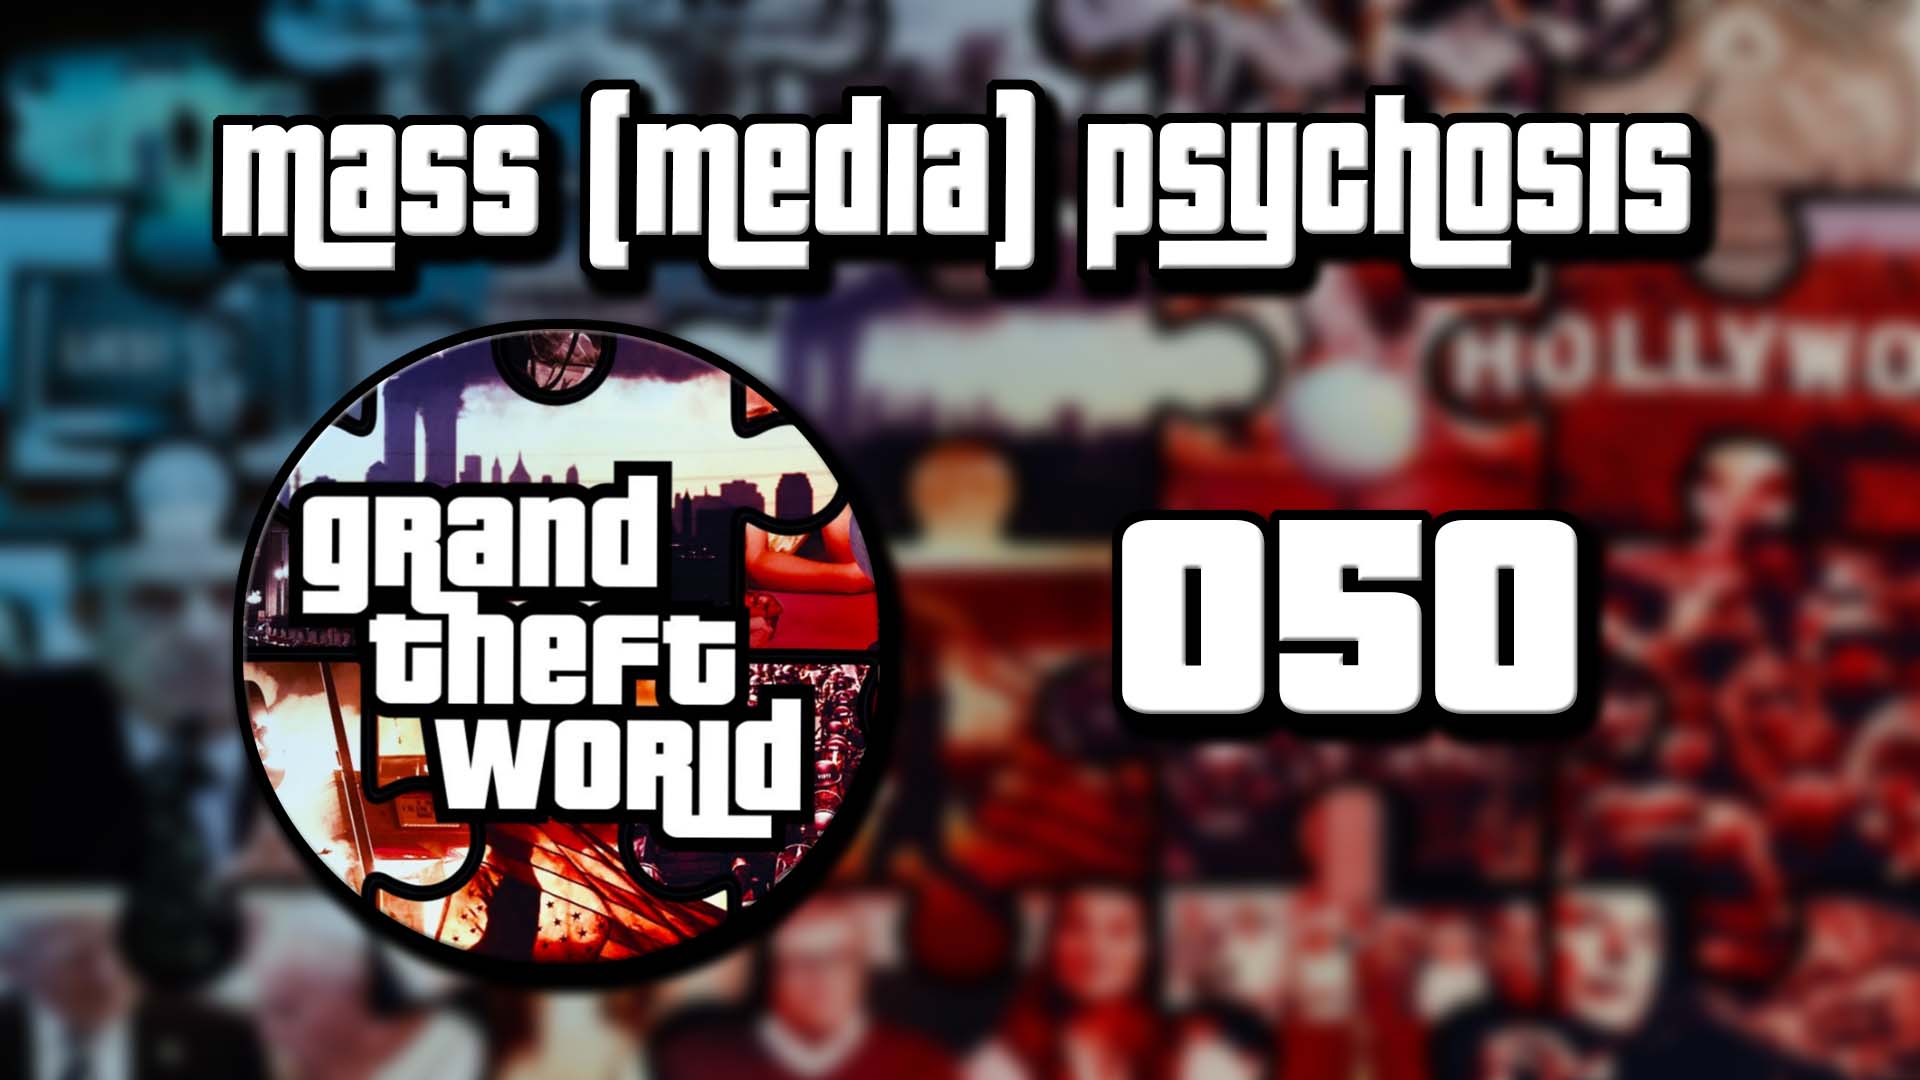 Grand Theft World Podcast 050 | Mass (Media) Psychosis